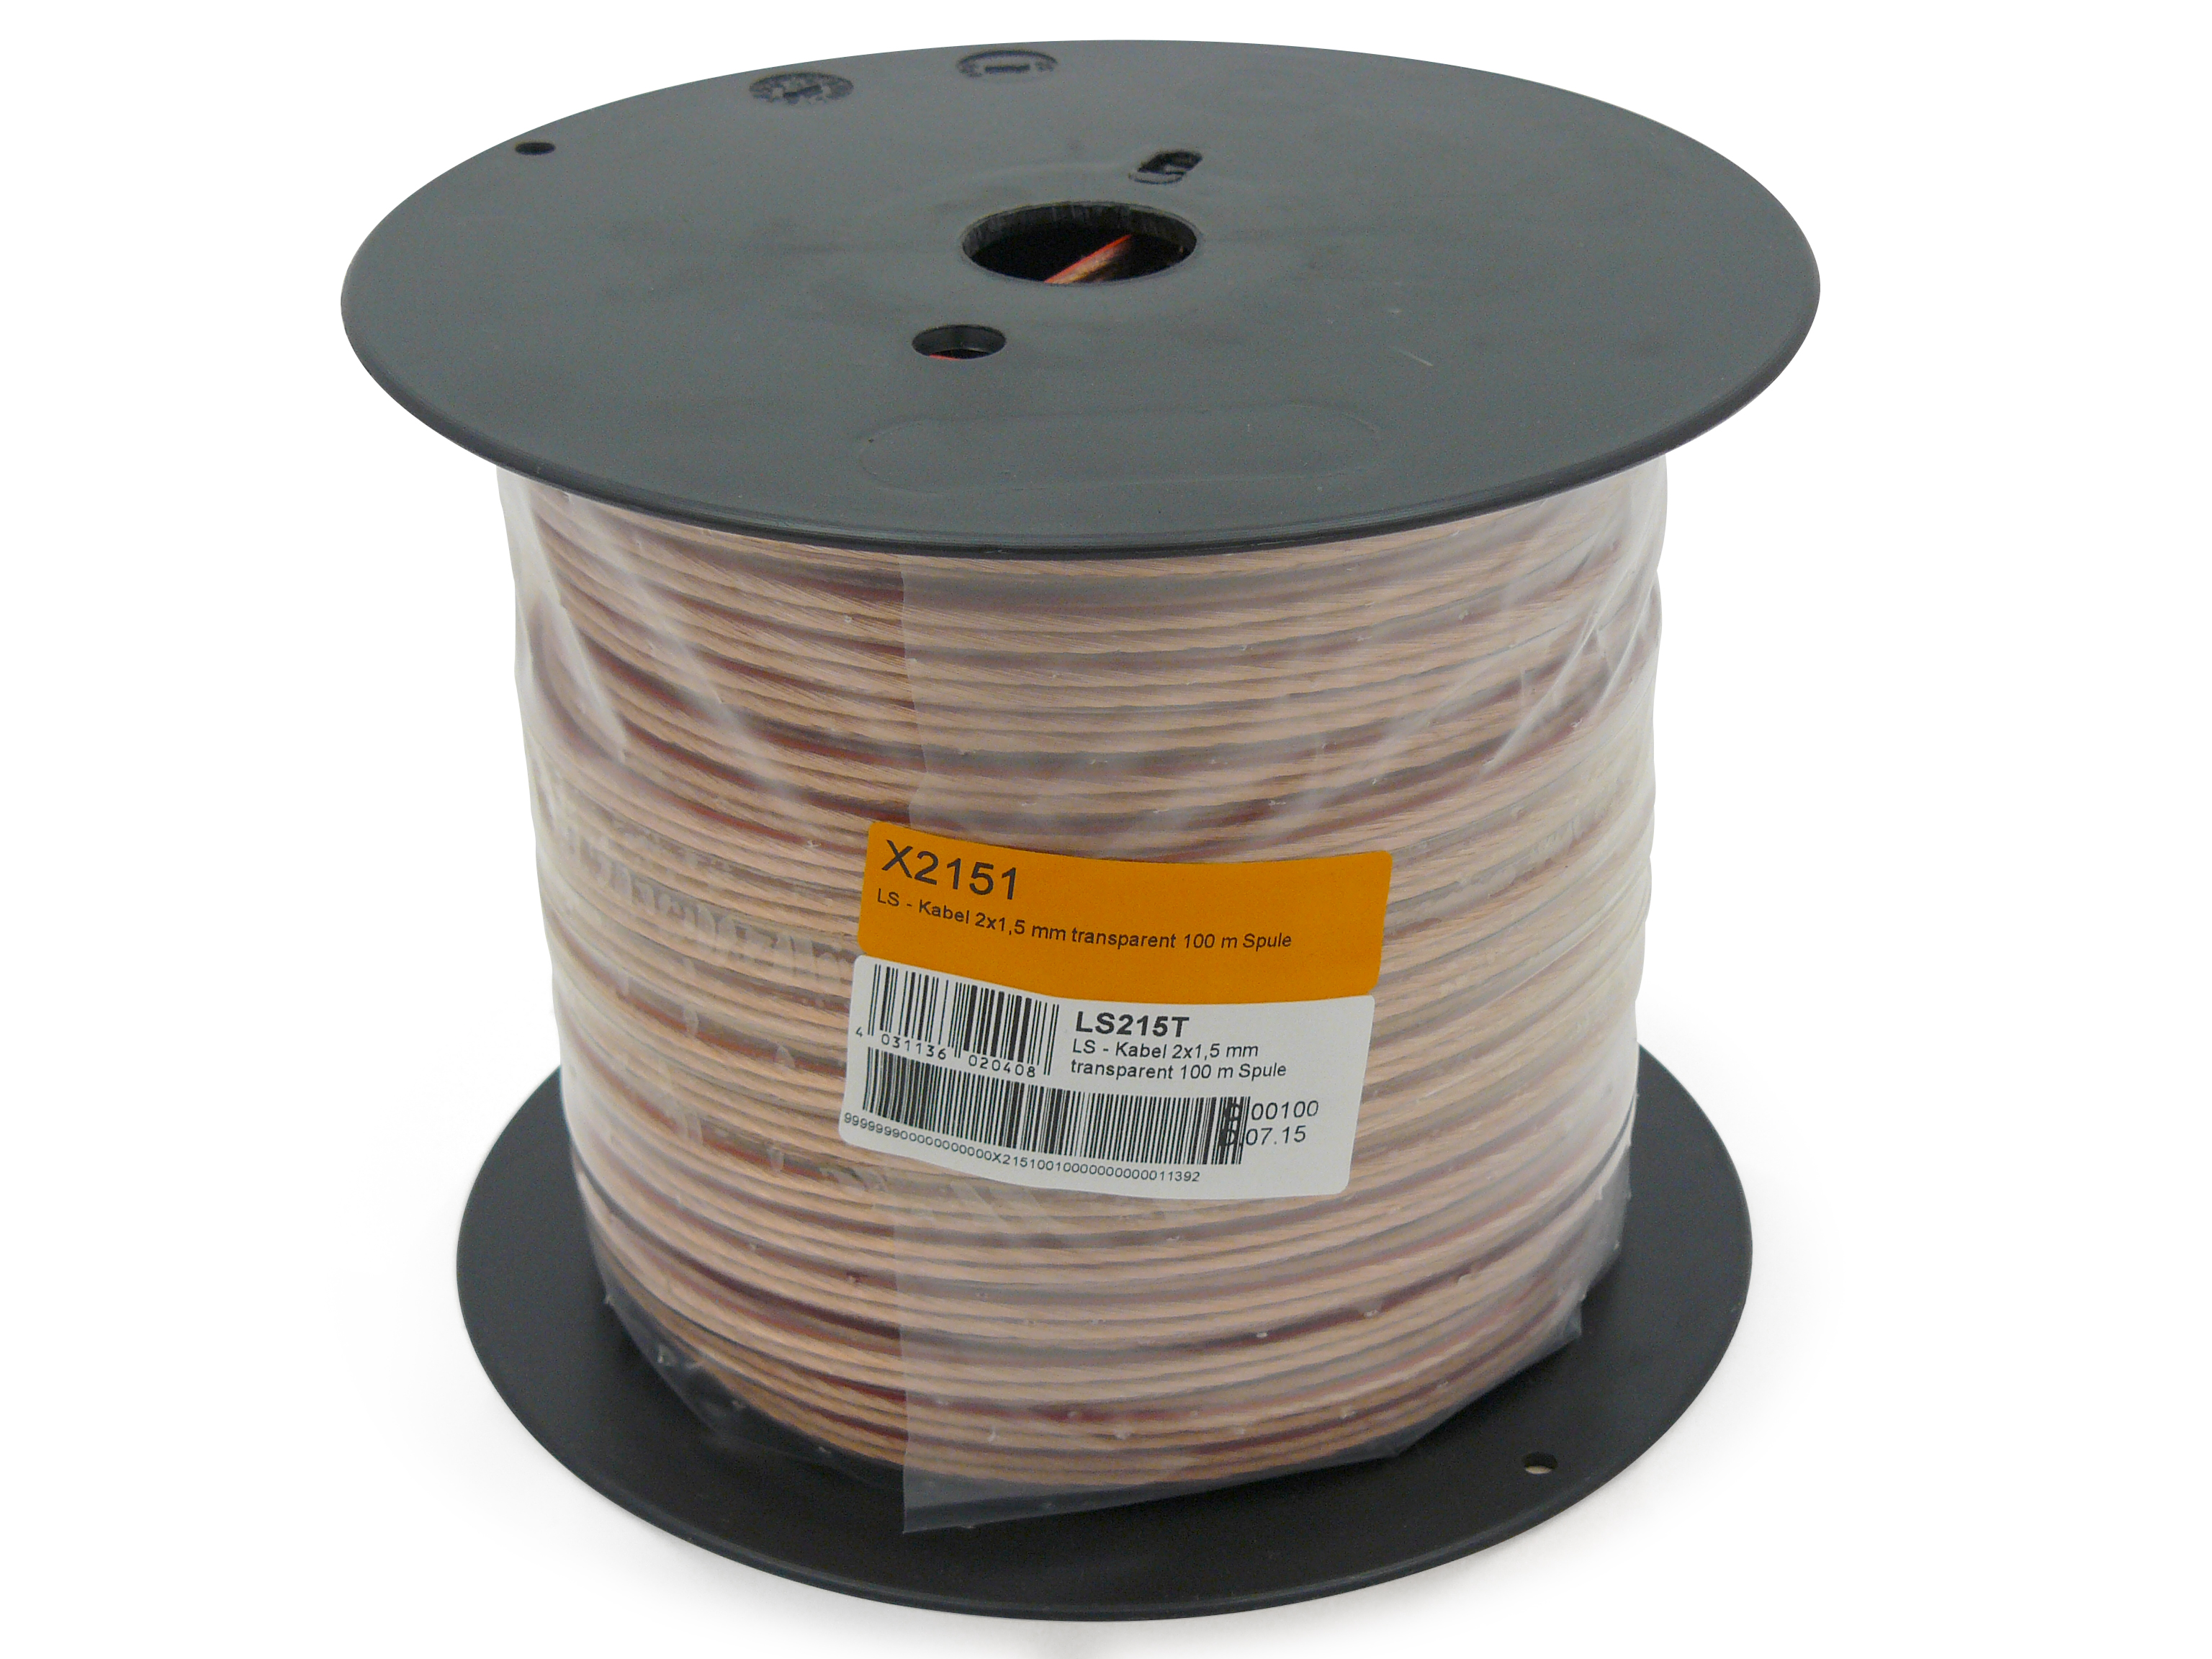 LS - Kabel 2x1,5 mm transparent 100 m Spule